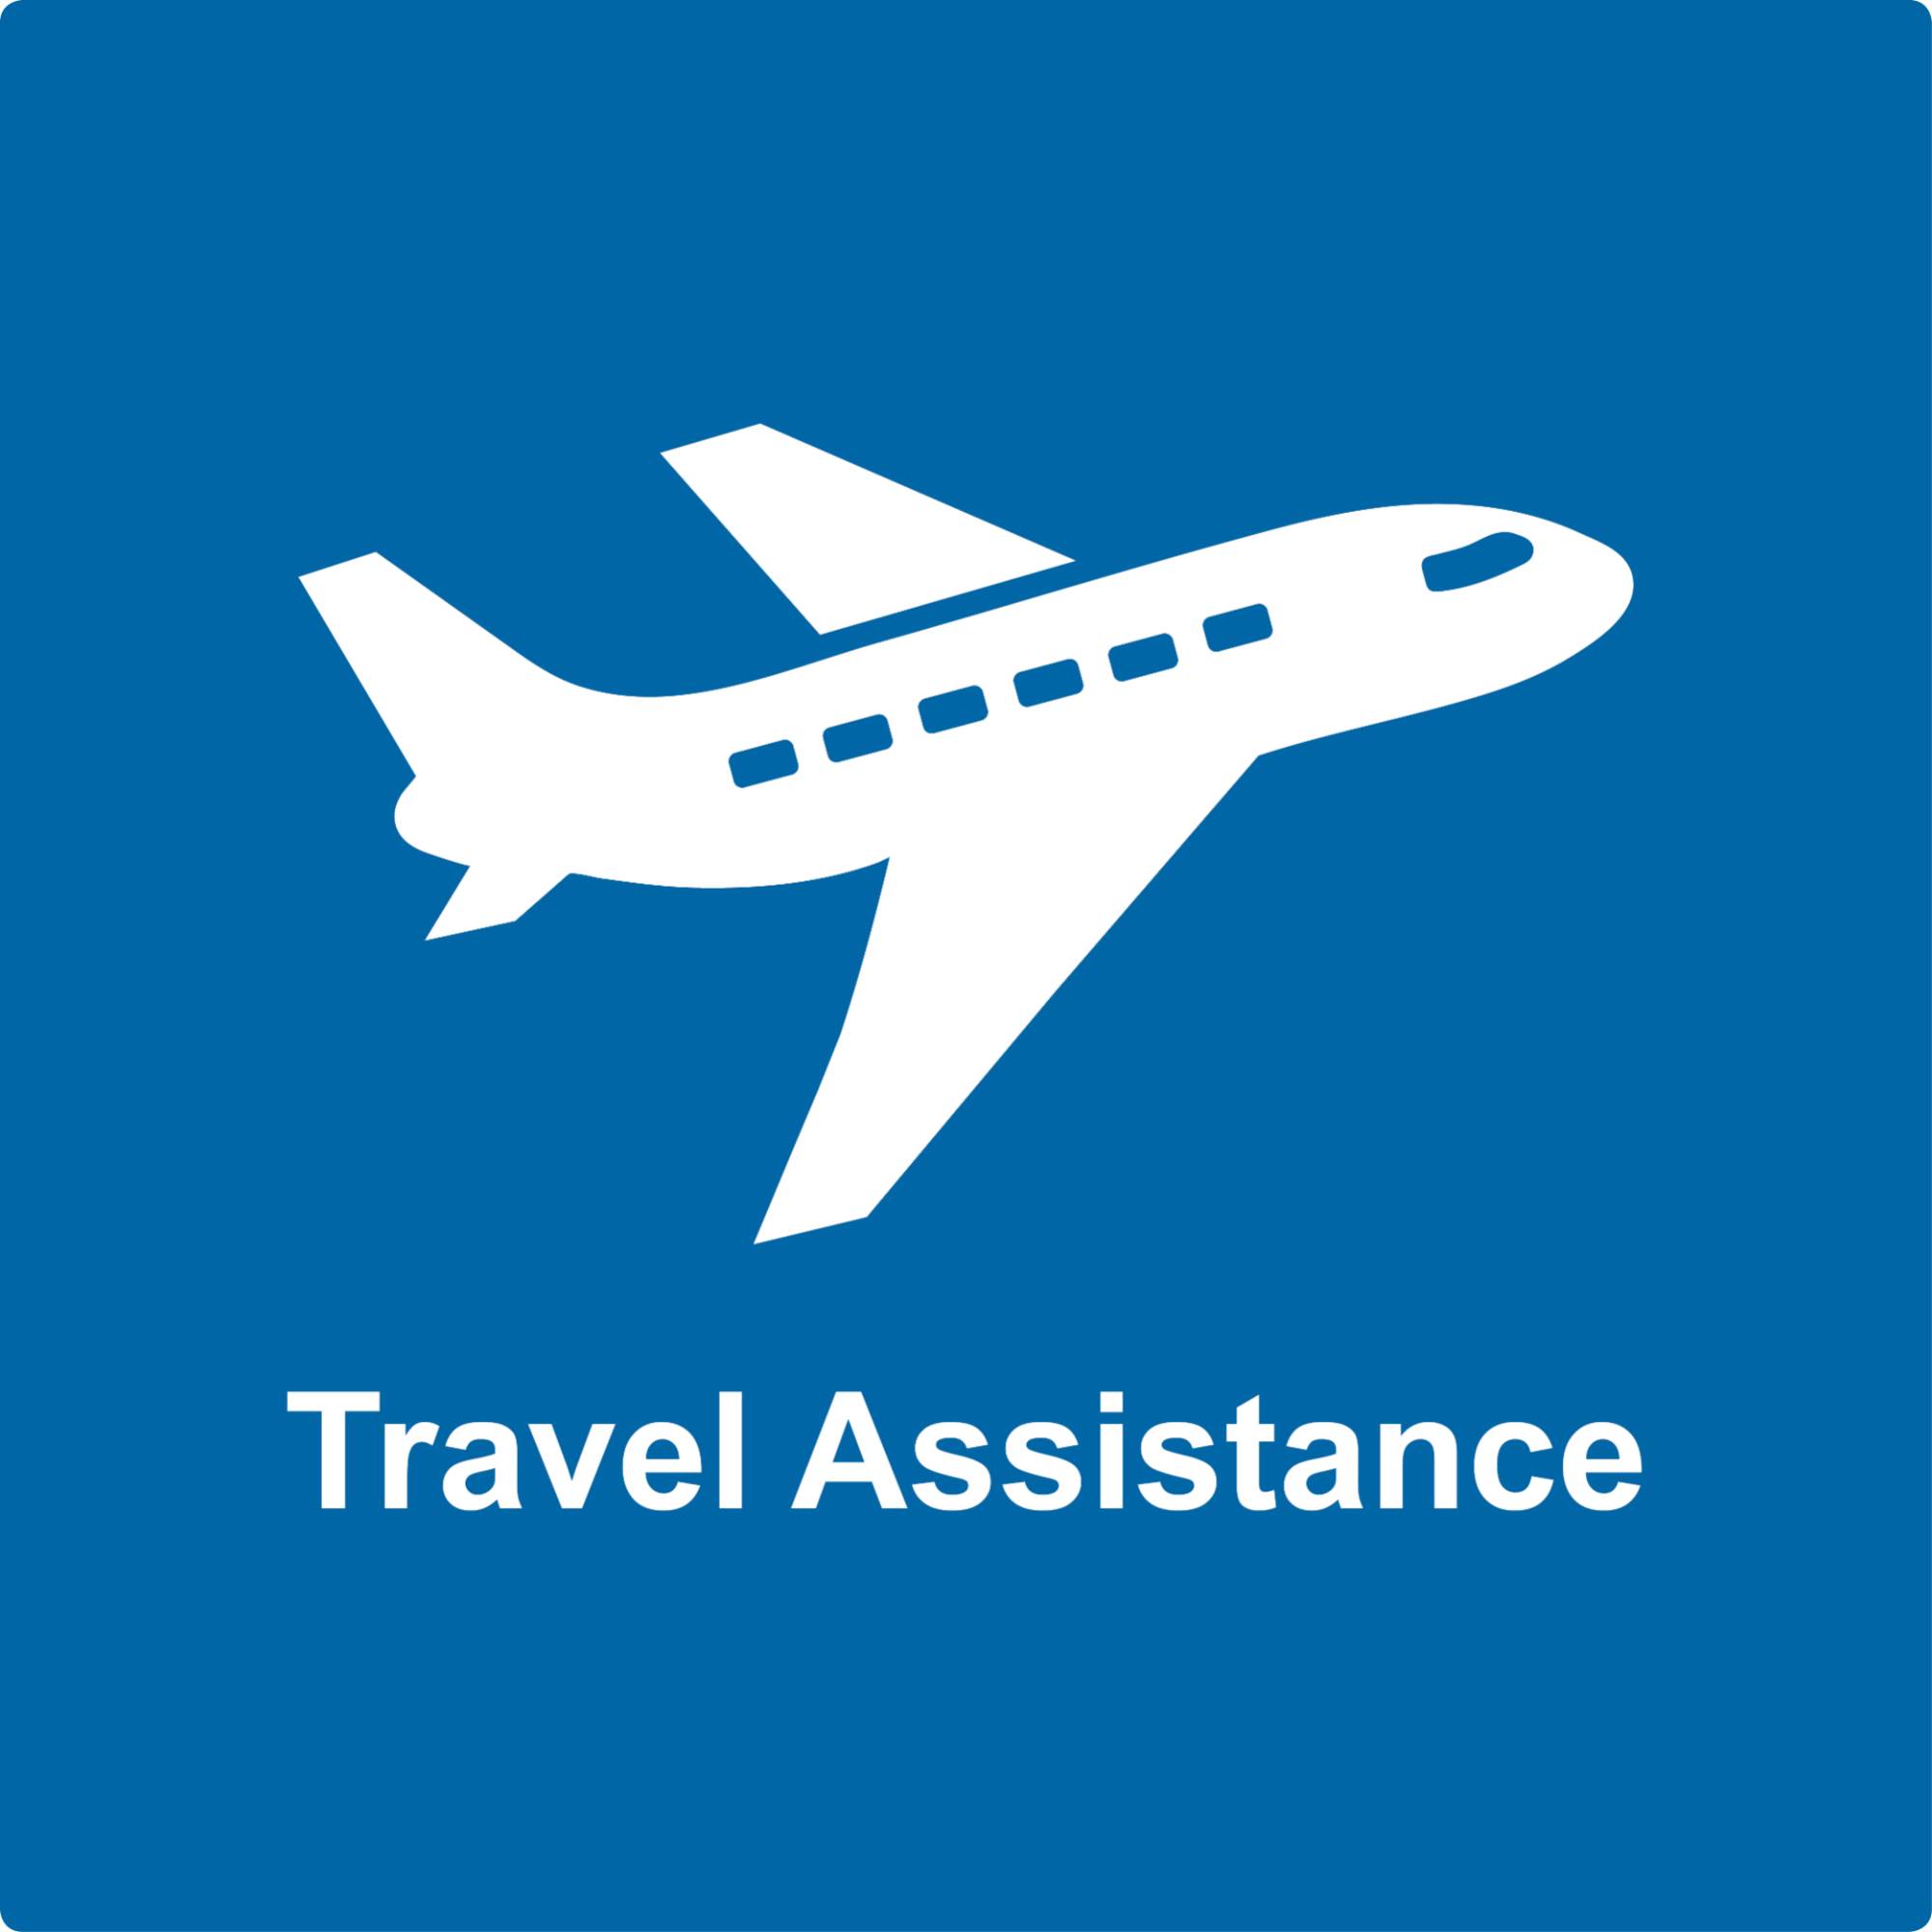 Travel Assistance Program